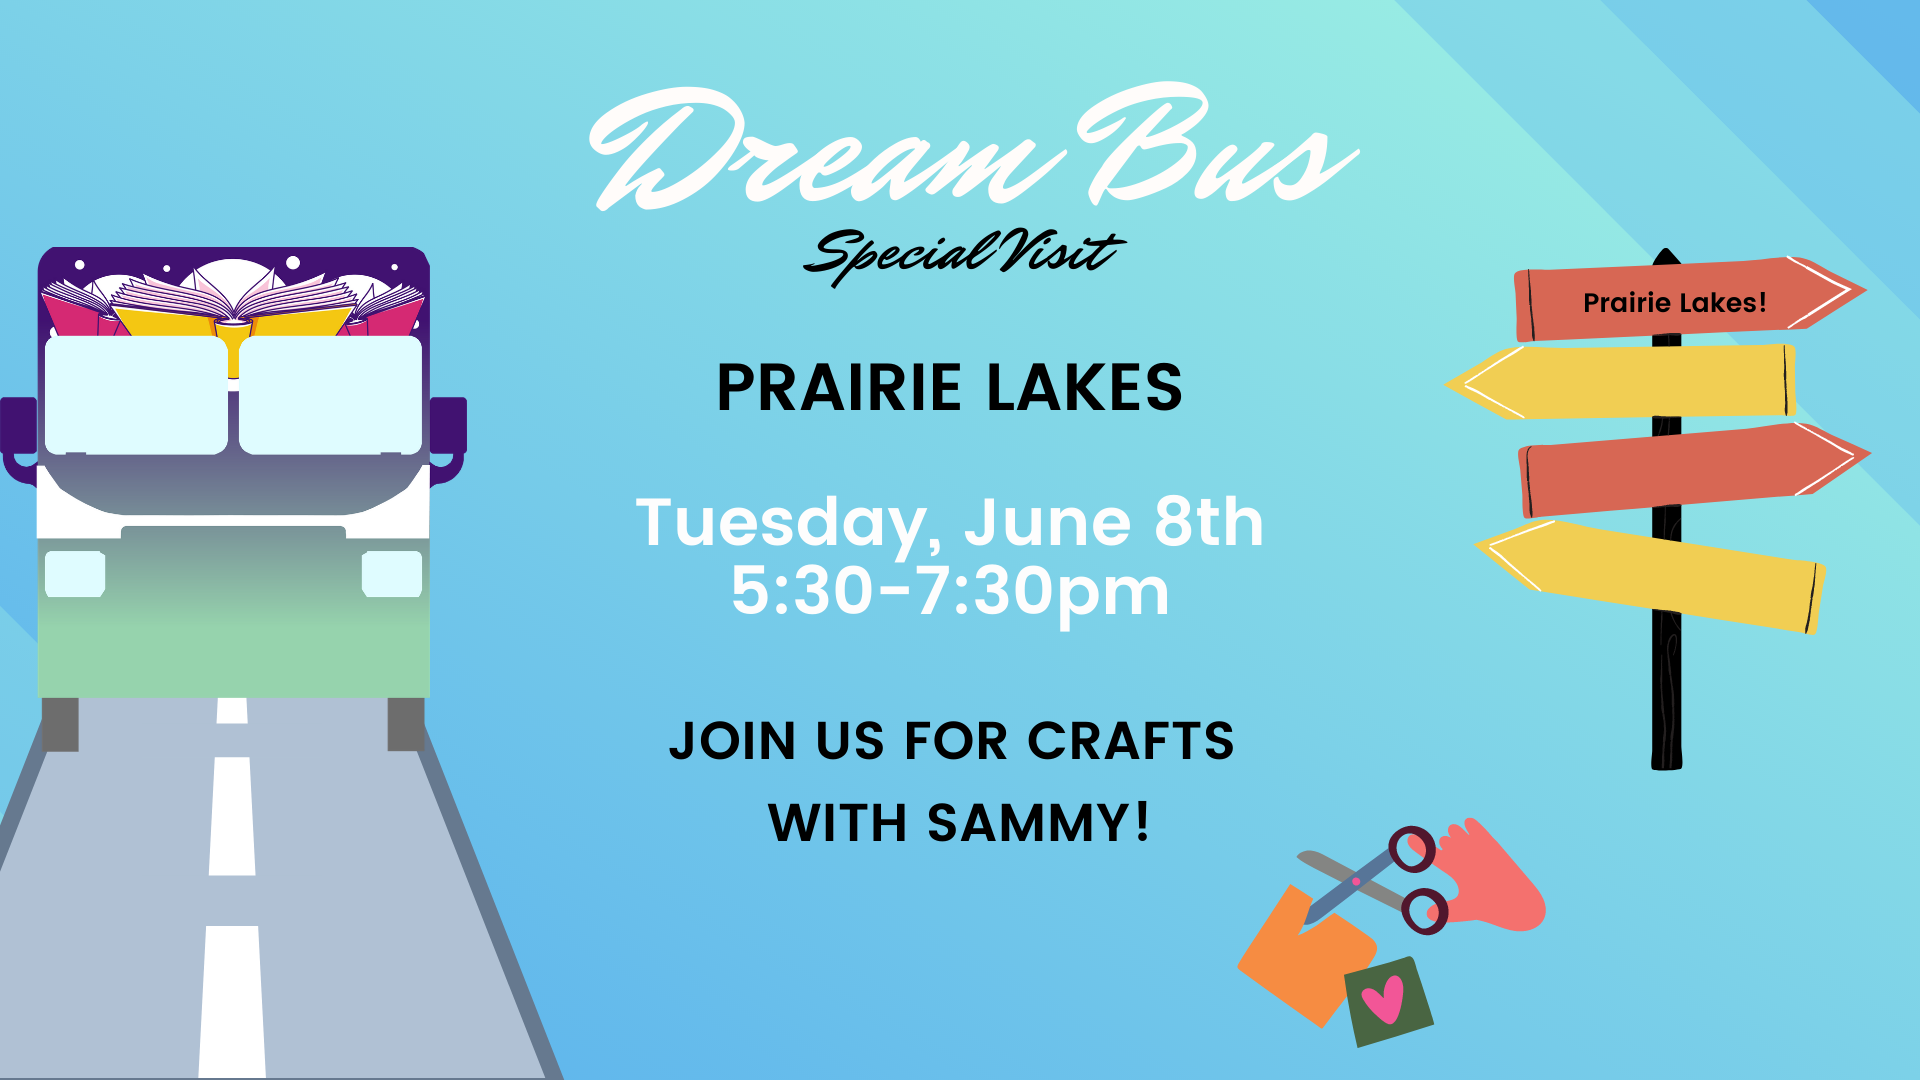 Dream Bus Special Visit at Prairie Lakes